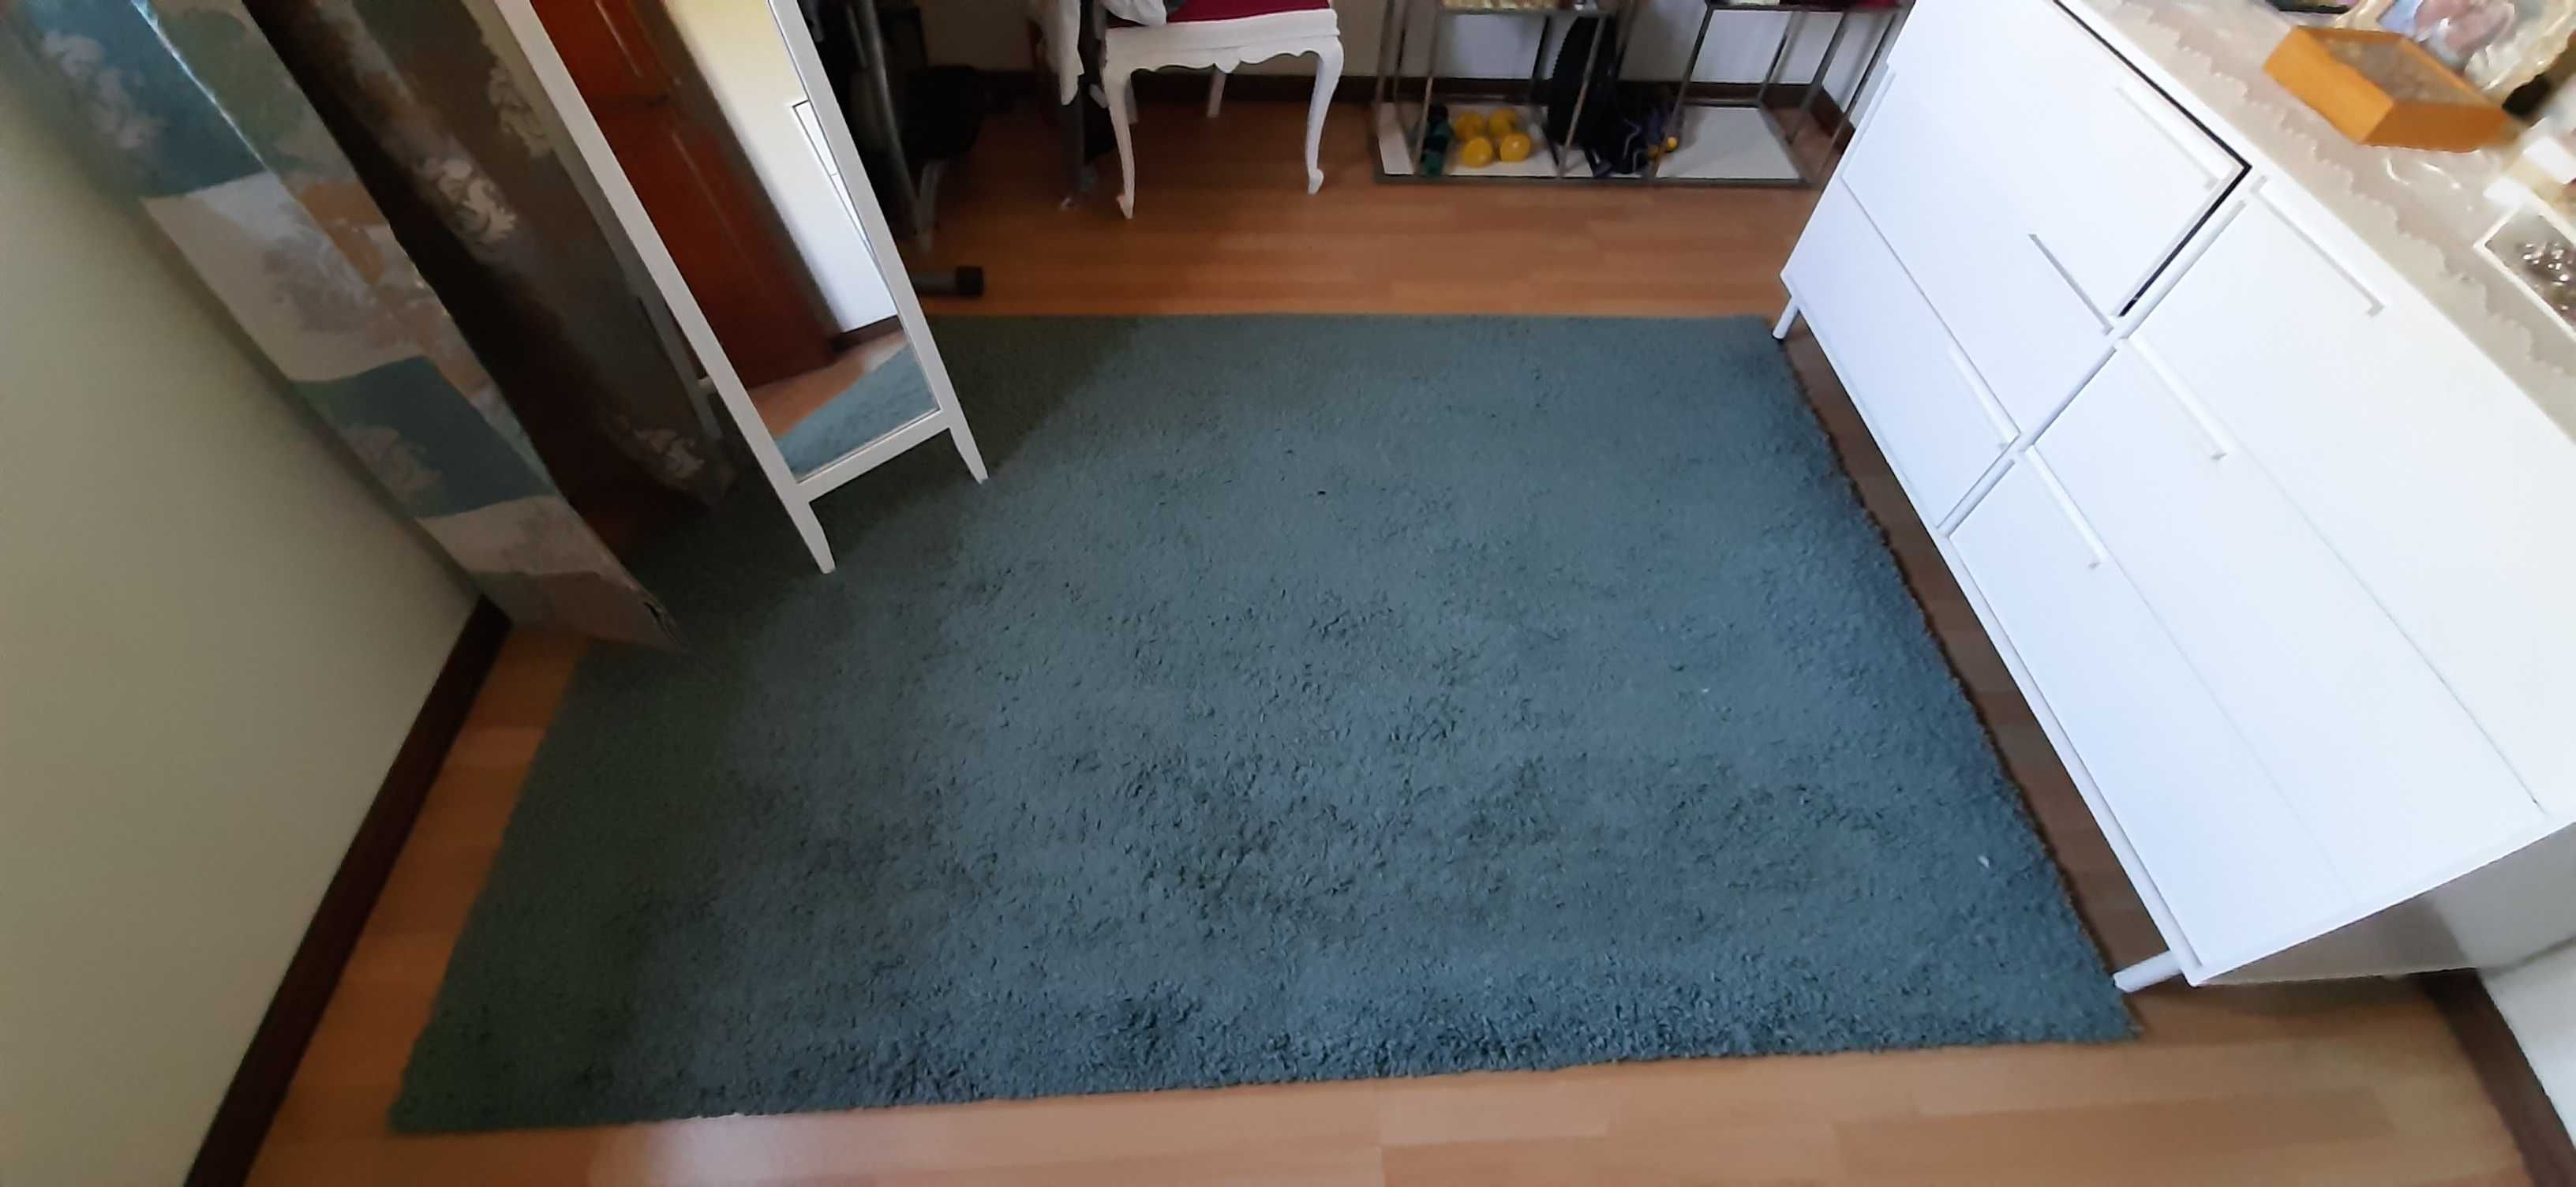 Carpete 230x160cms